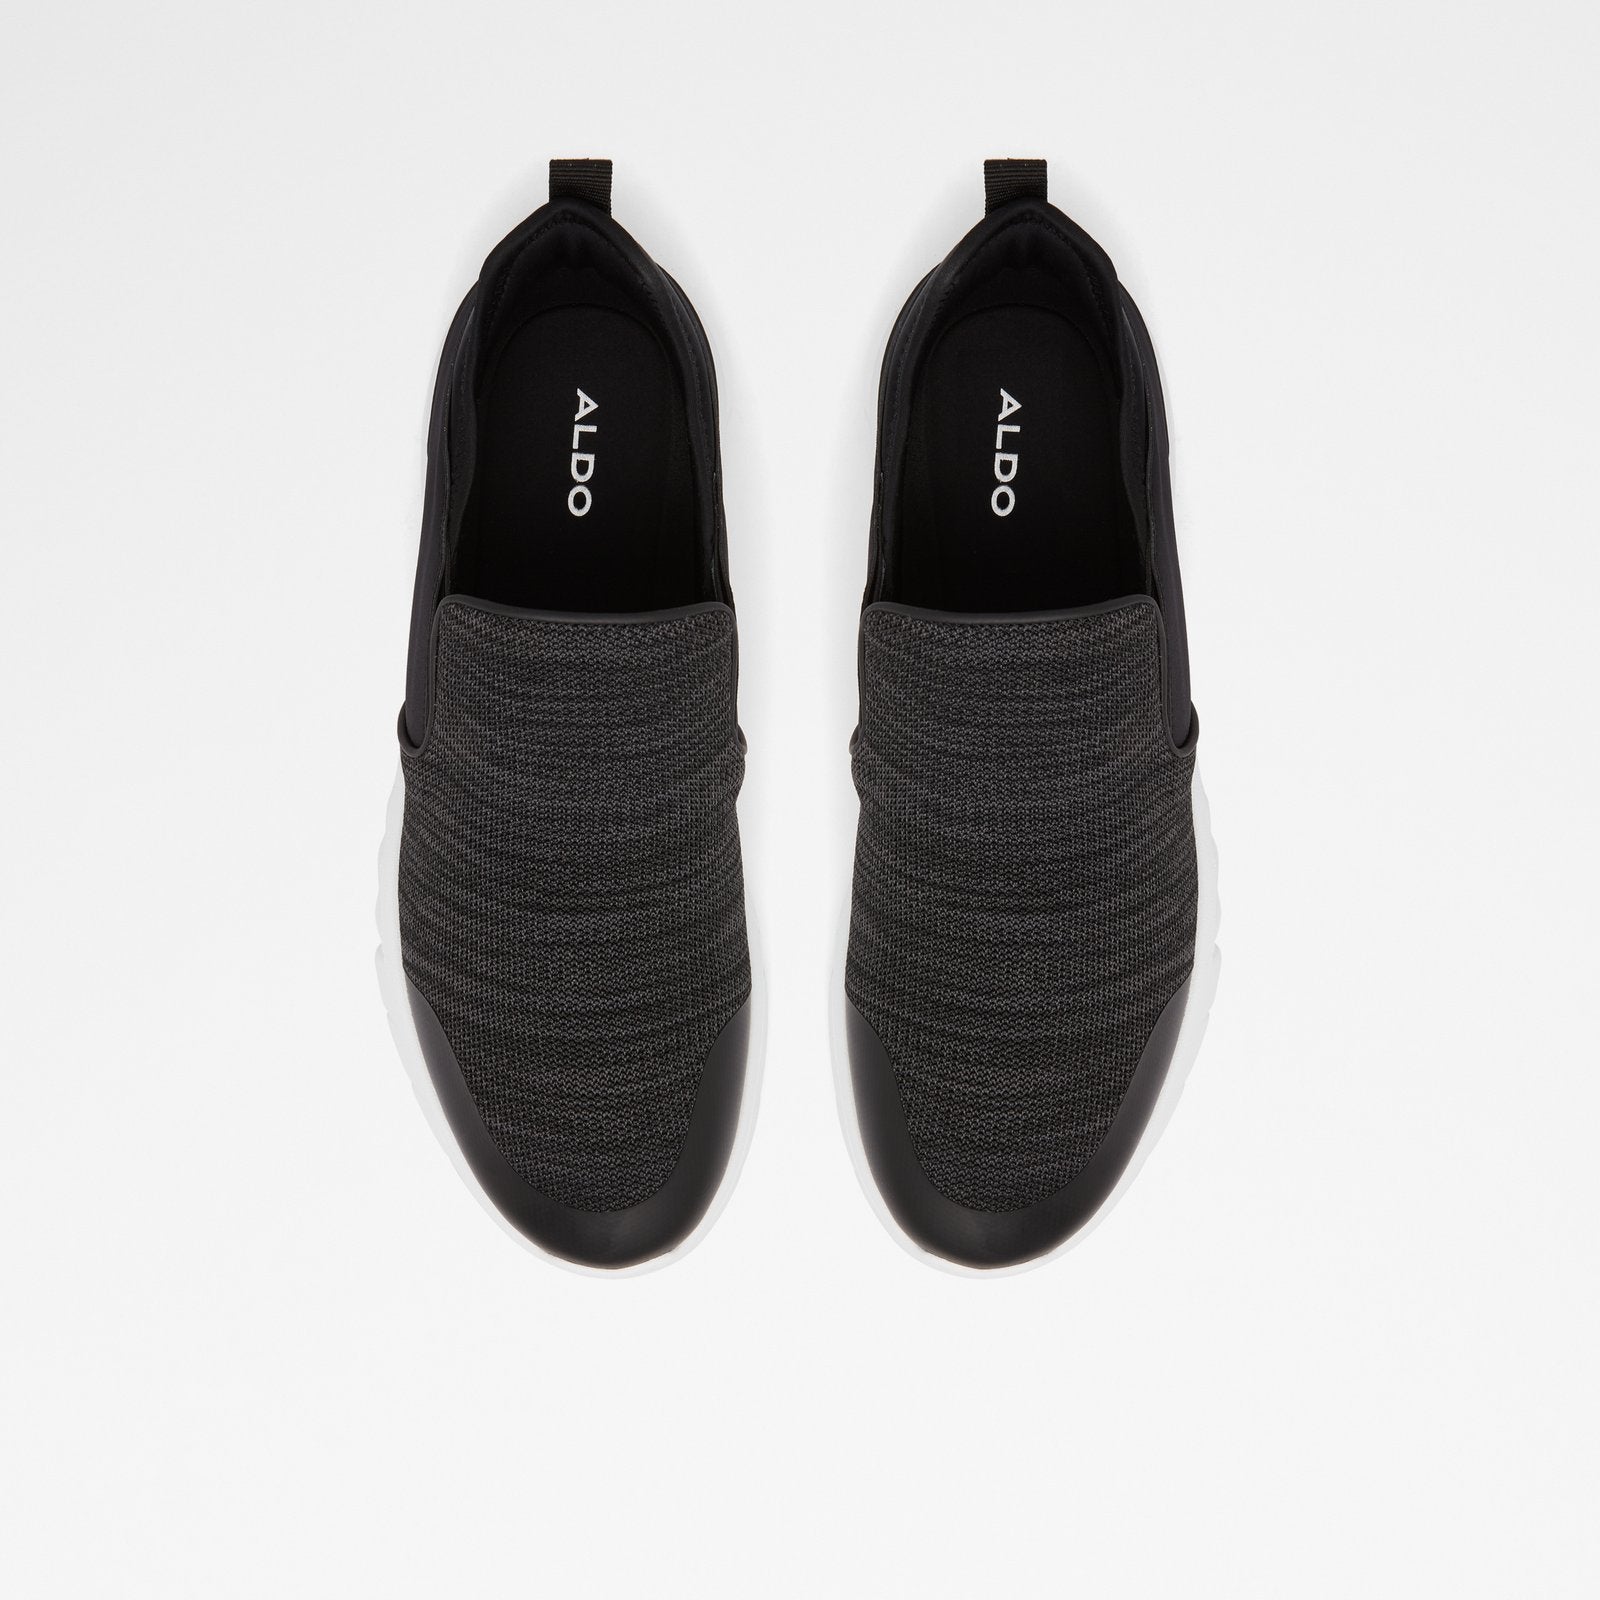 Partaud Men Shoes - Black - ALDO KSA